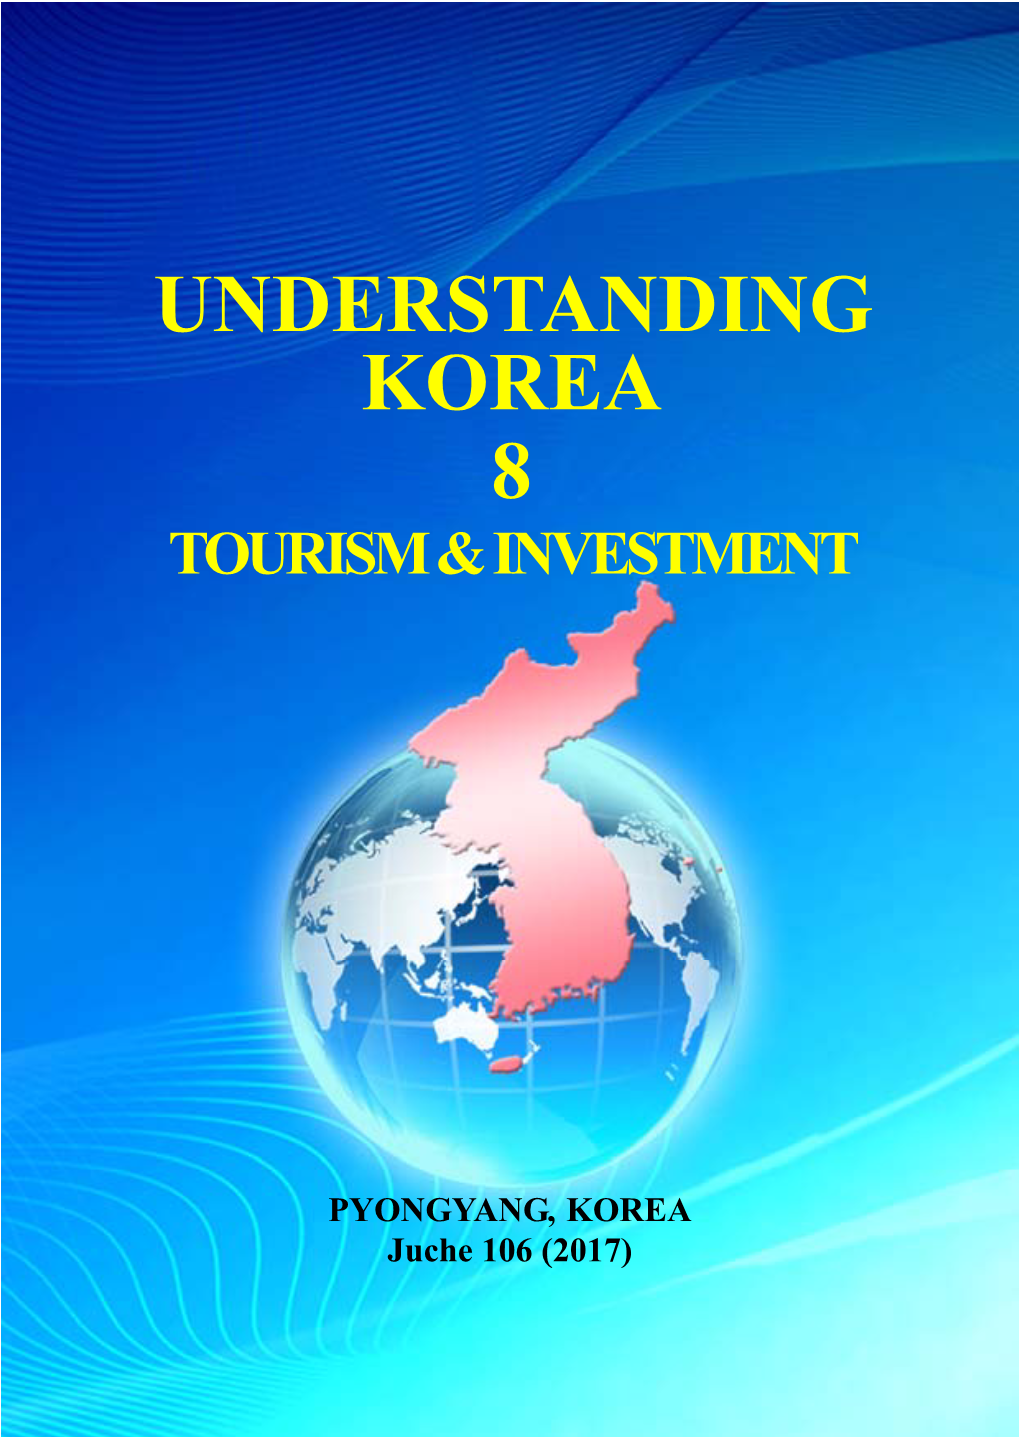 Understanding Korea 8 Tourism & Investment